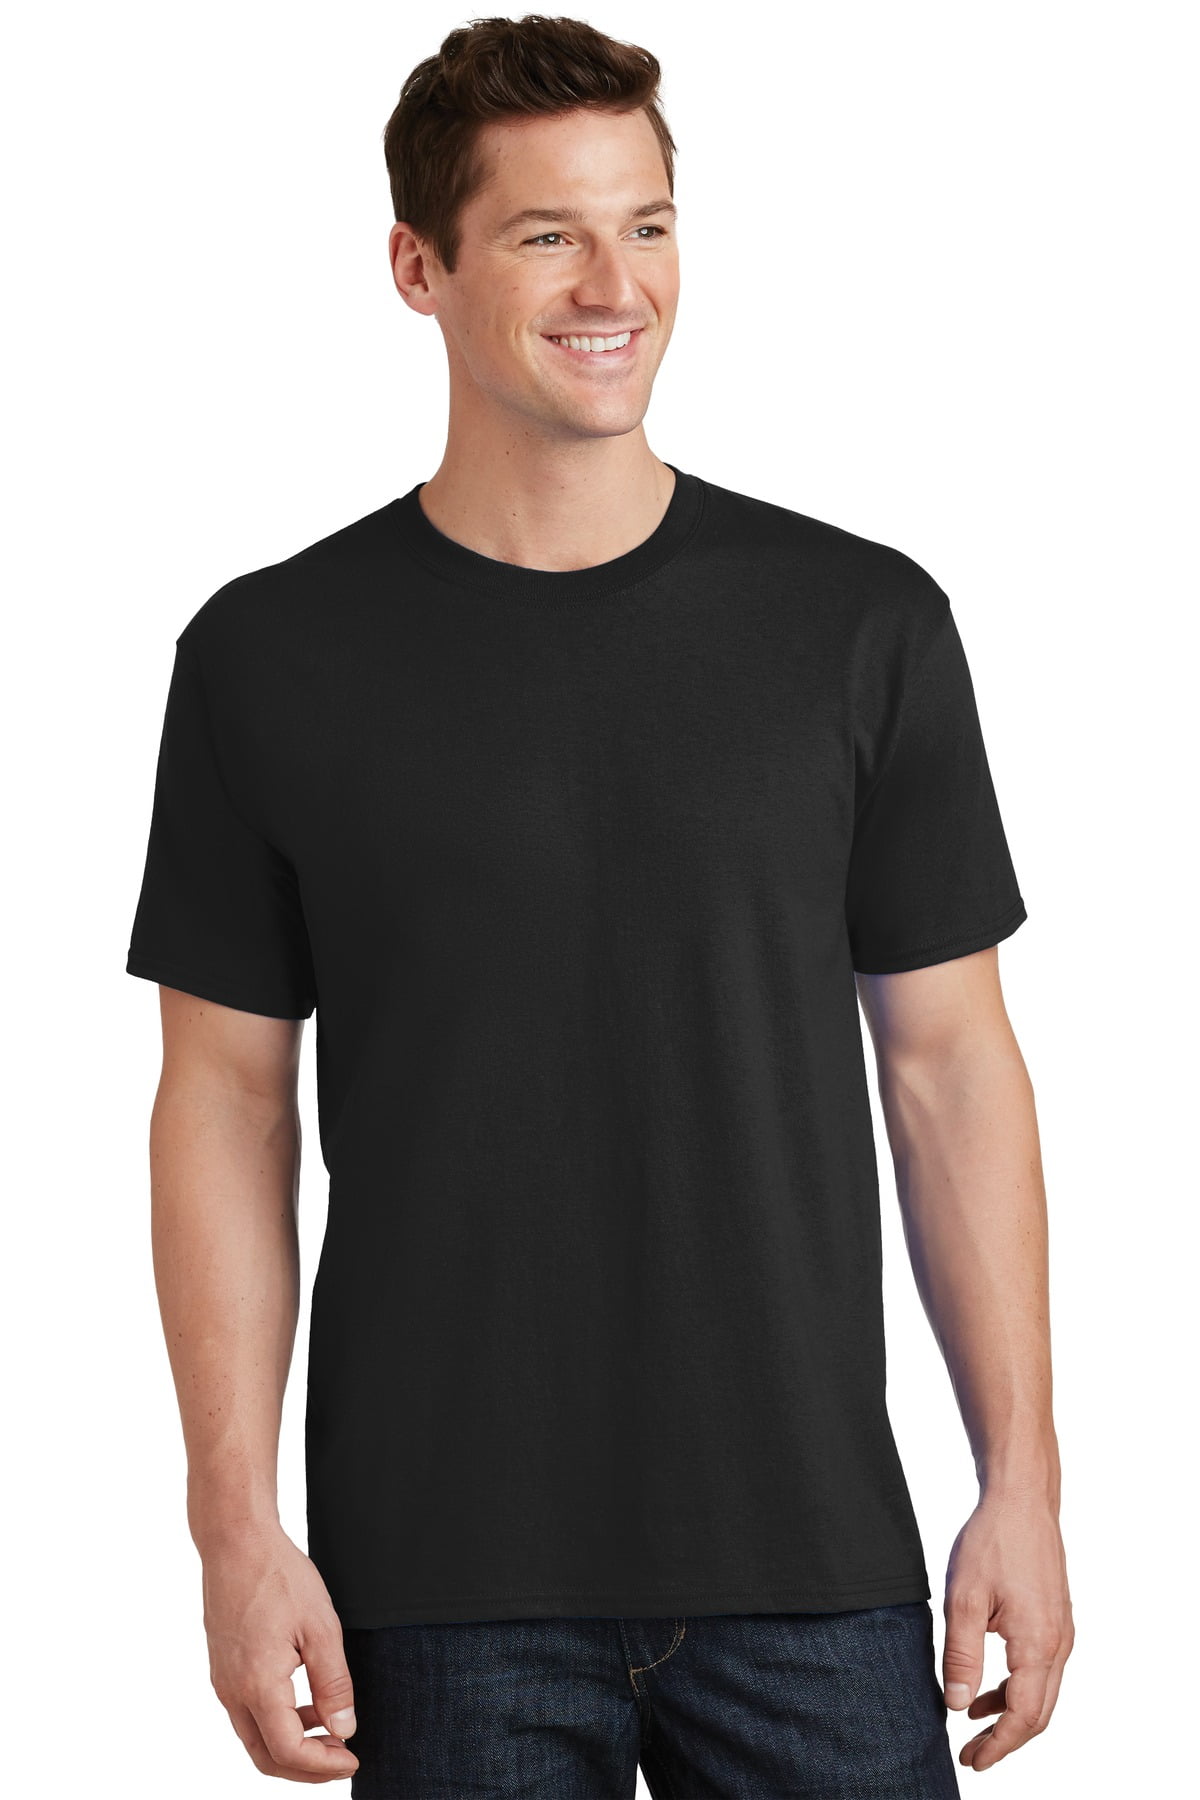 USA-Made 100% Cotton Short Sleeve T-Shirt L/Cardinal